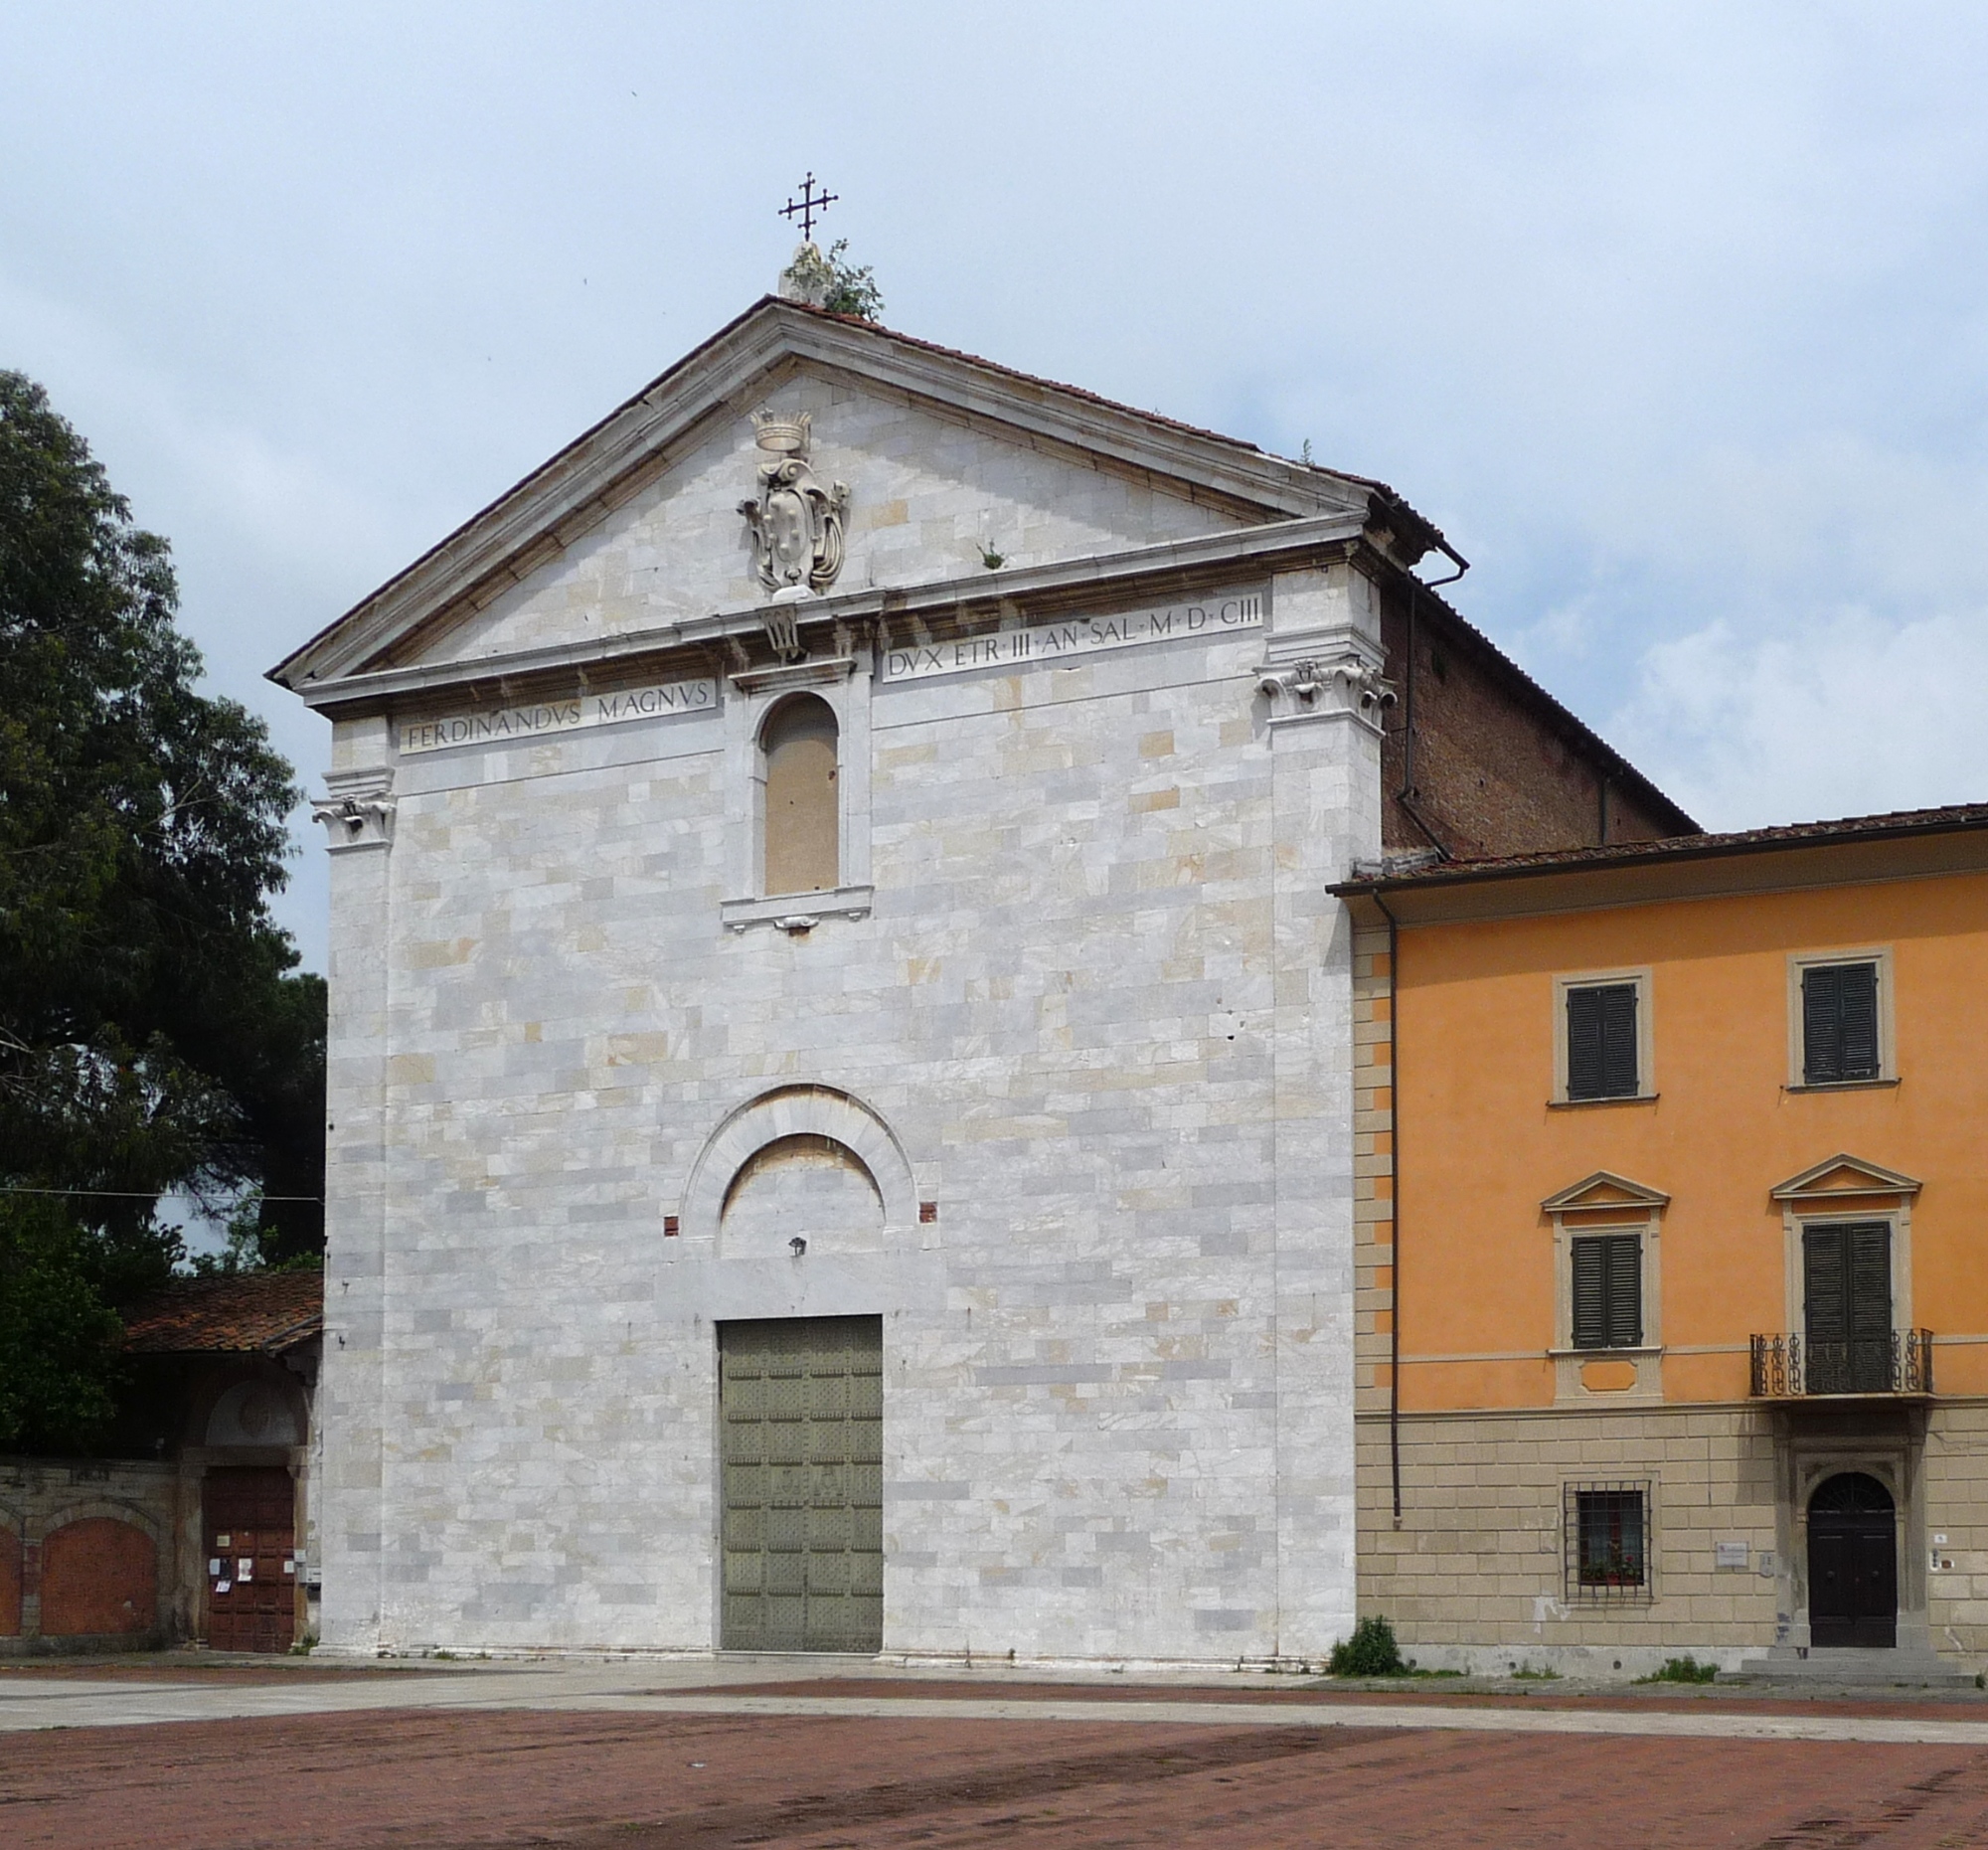 Church of San Francesco in Pisa